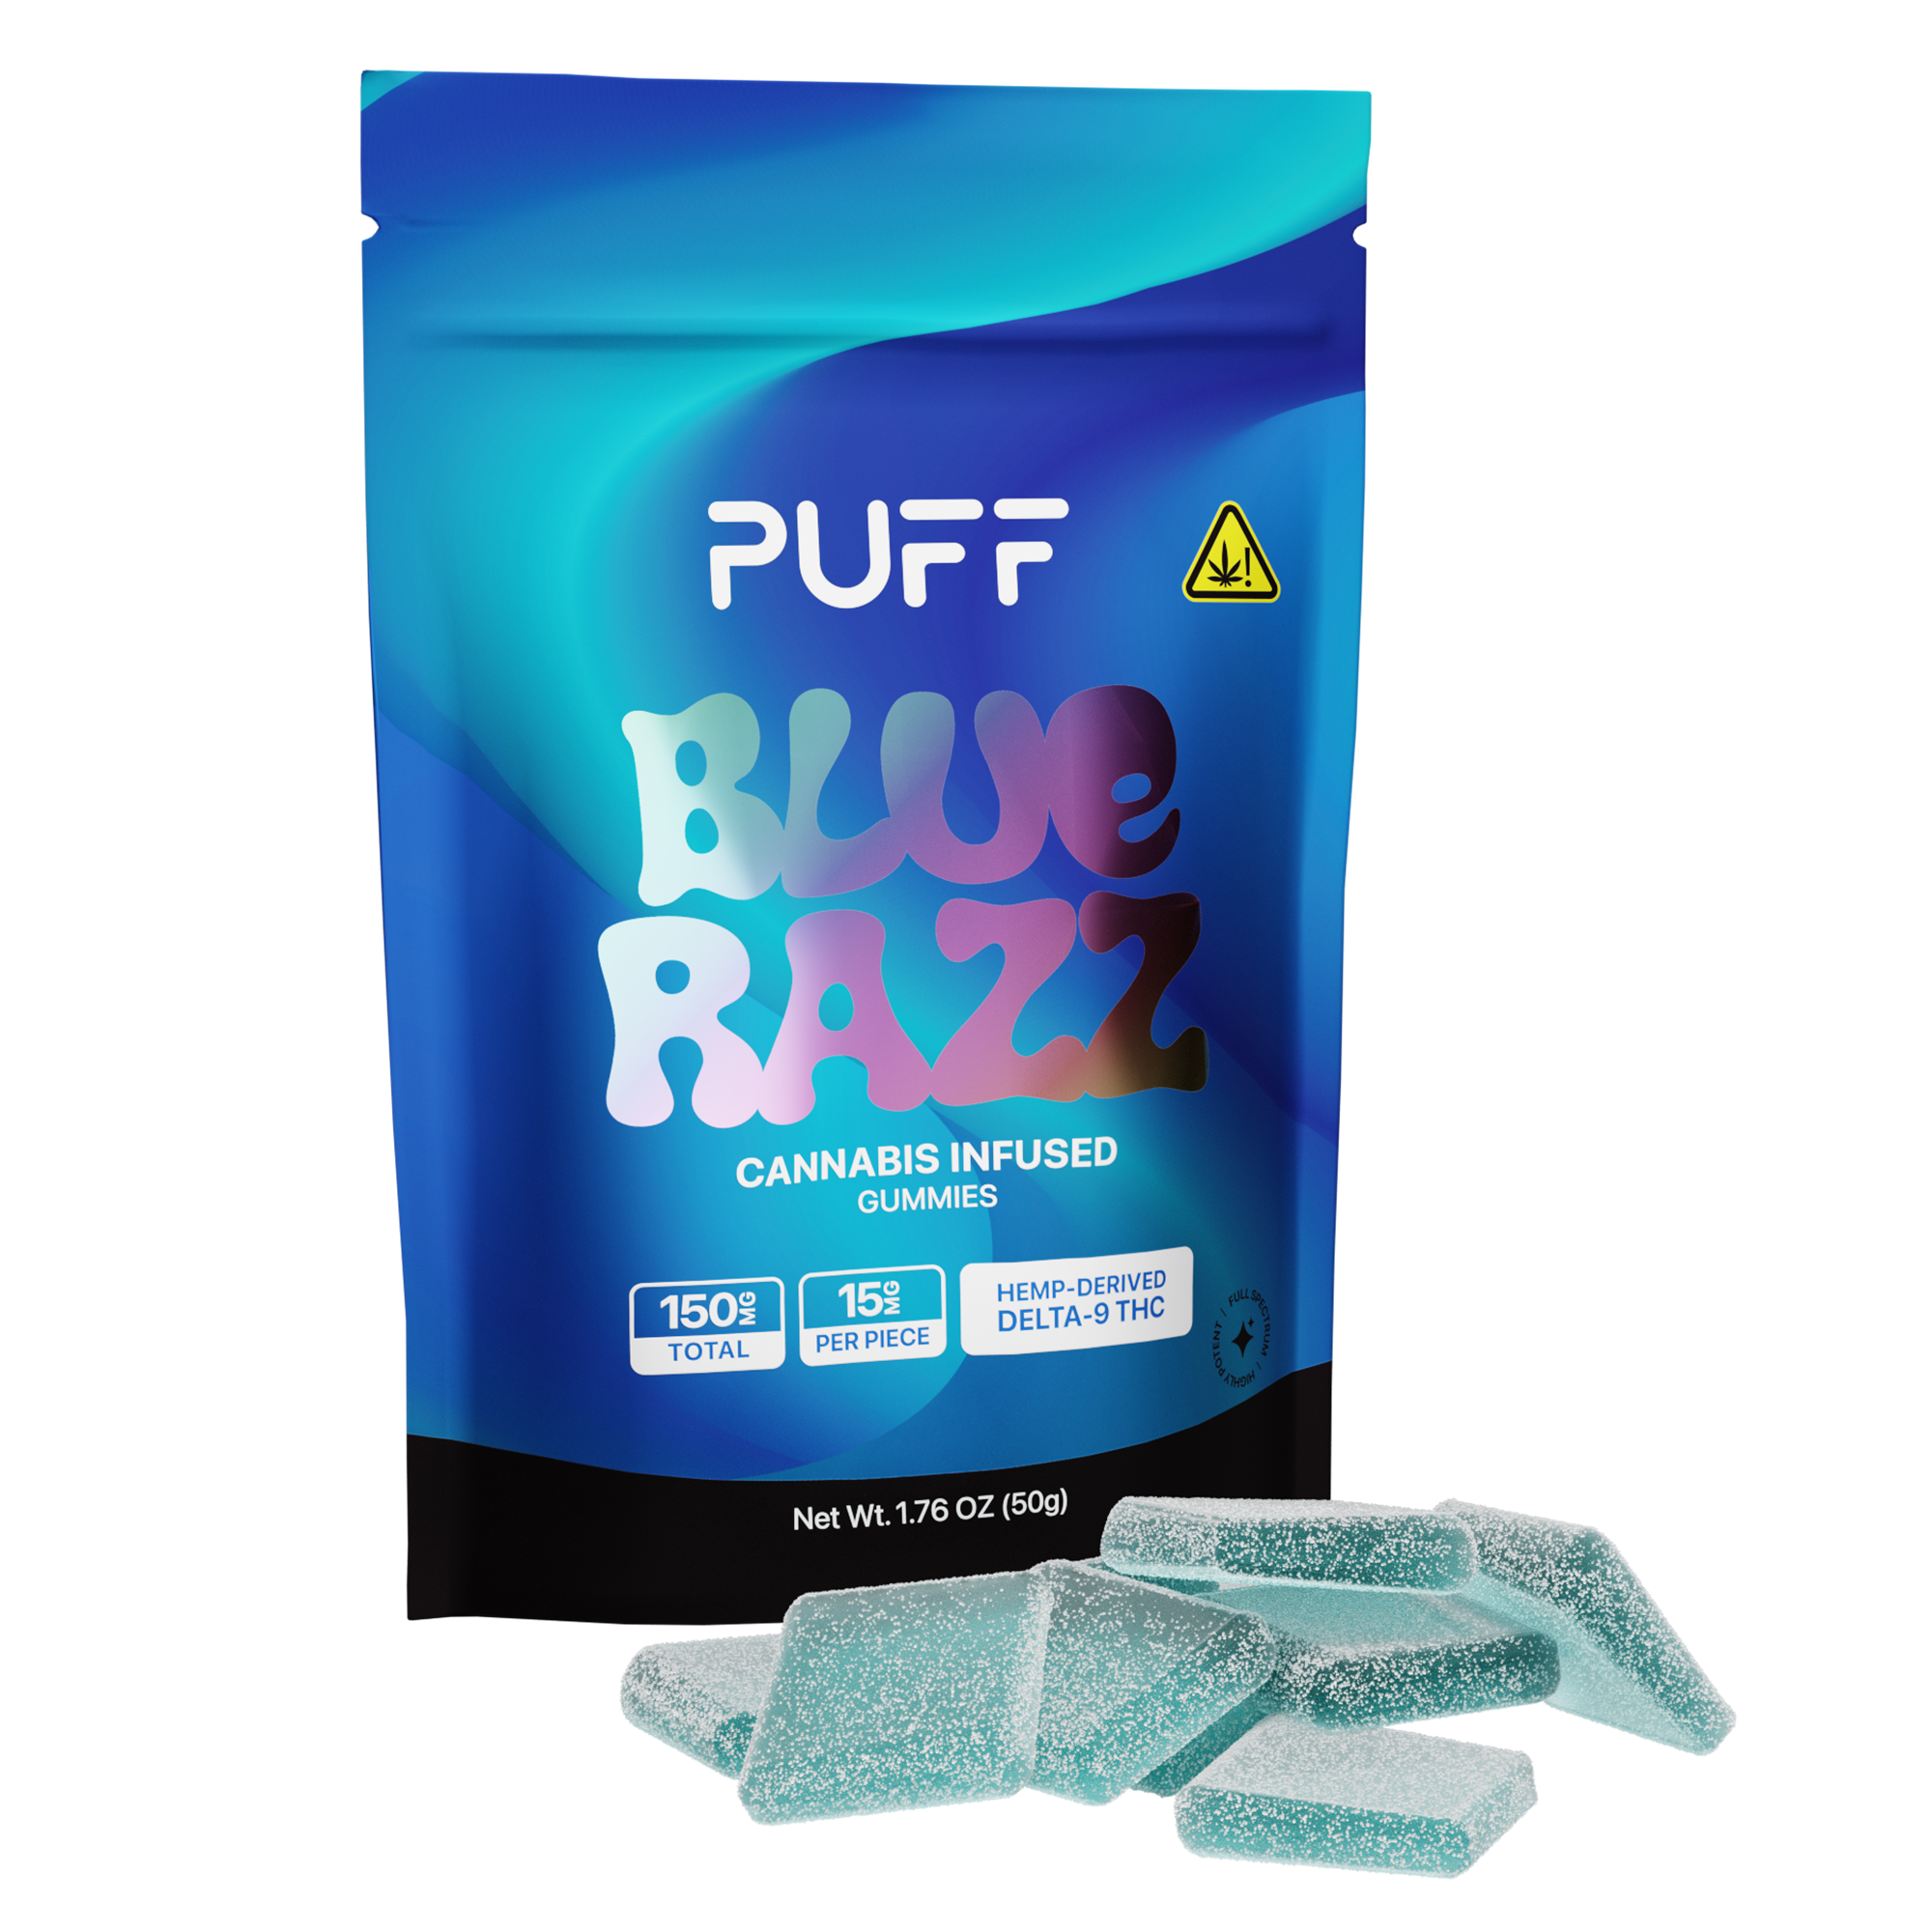 Puff Bar Delta 9 THC Blue Razz Edible Cannabis Infused Gummies